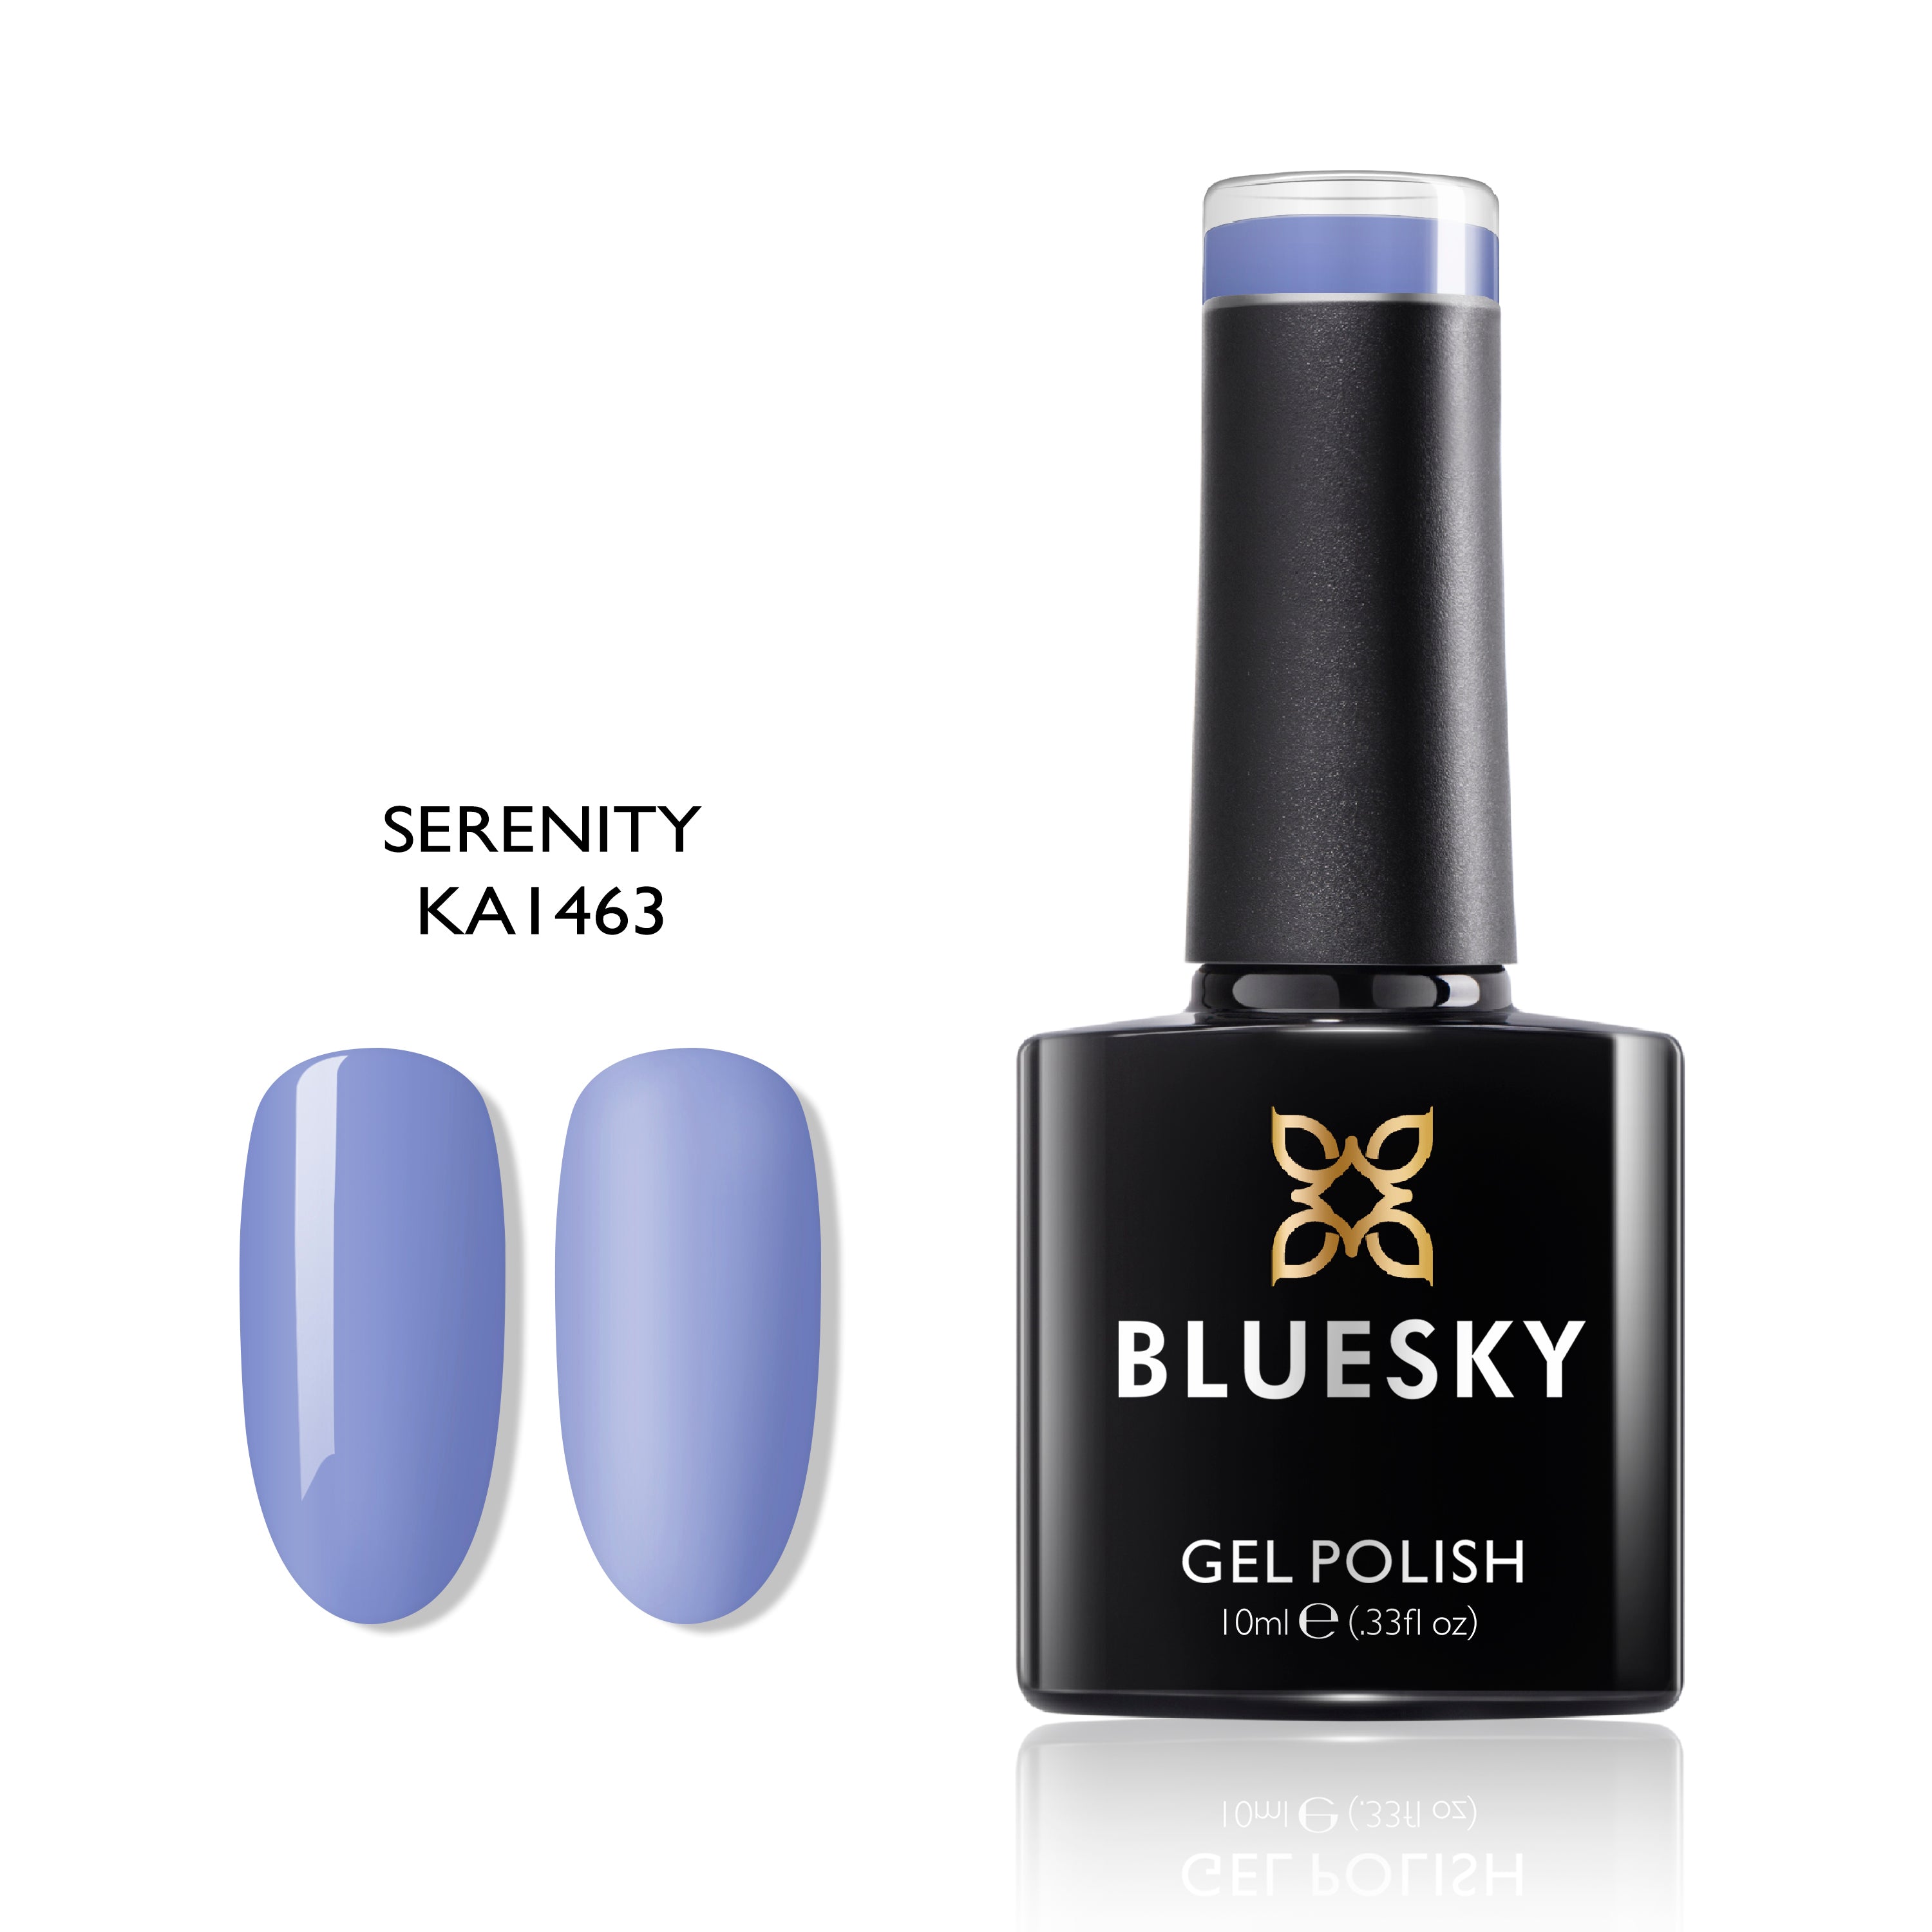 SERENITY | 10ml Gel Polish - BLUESKY